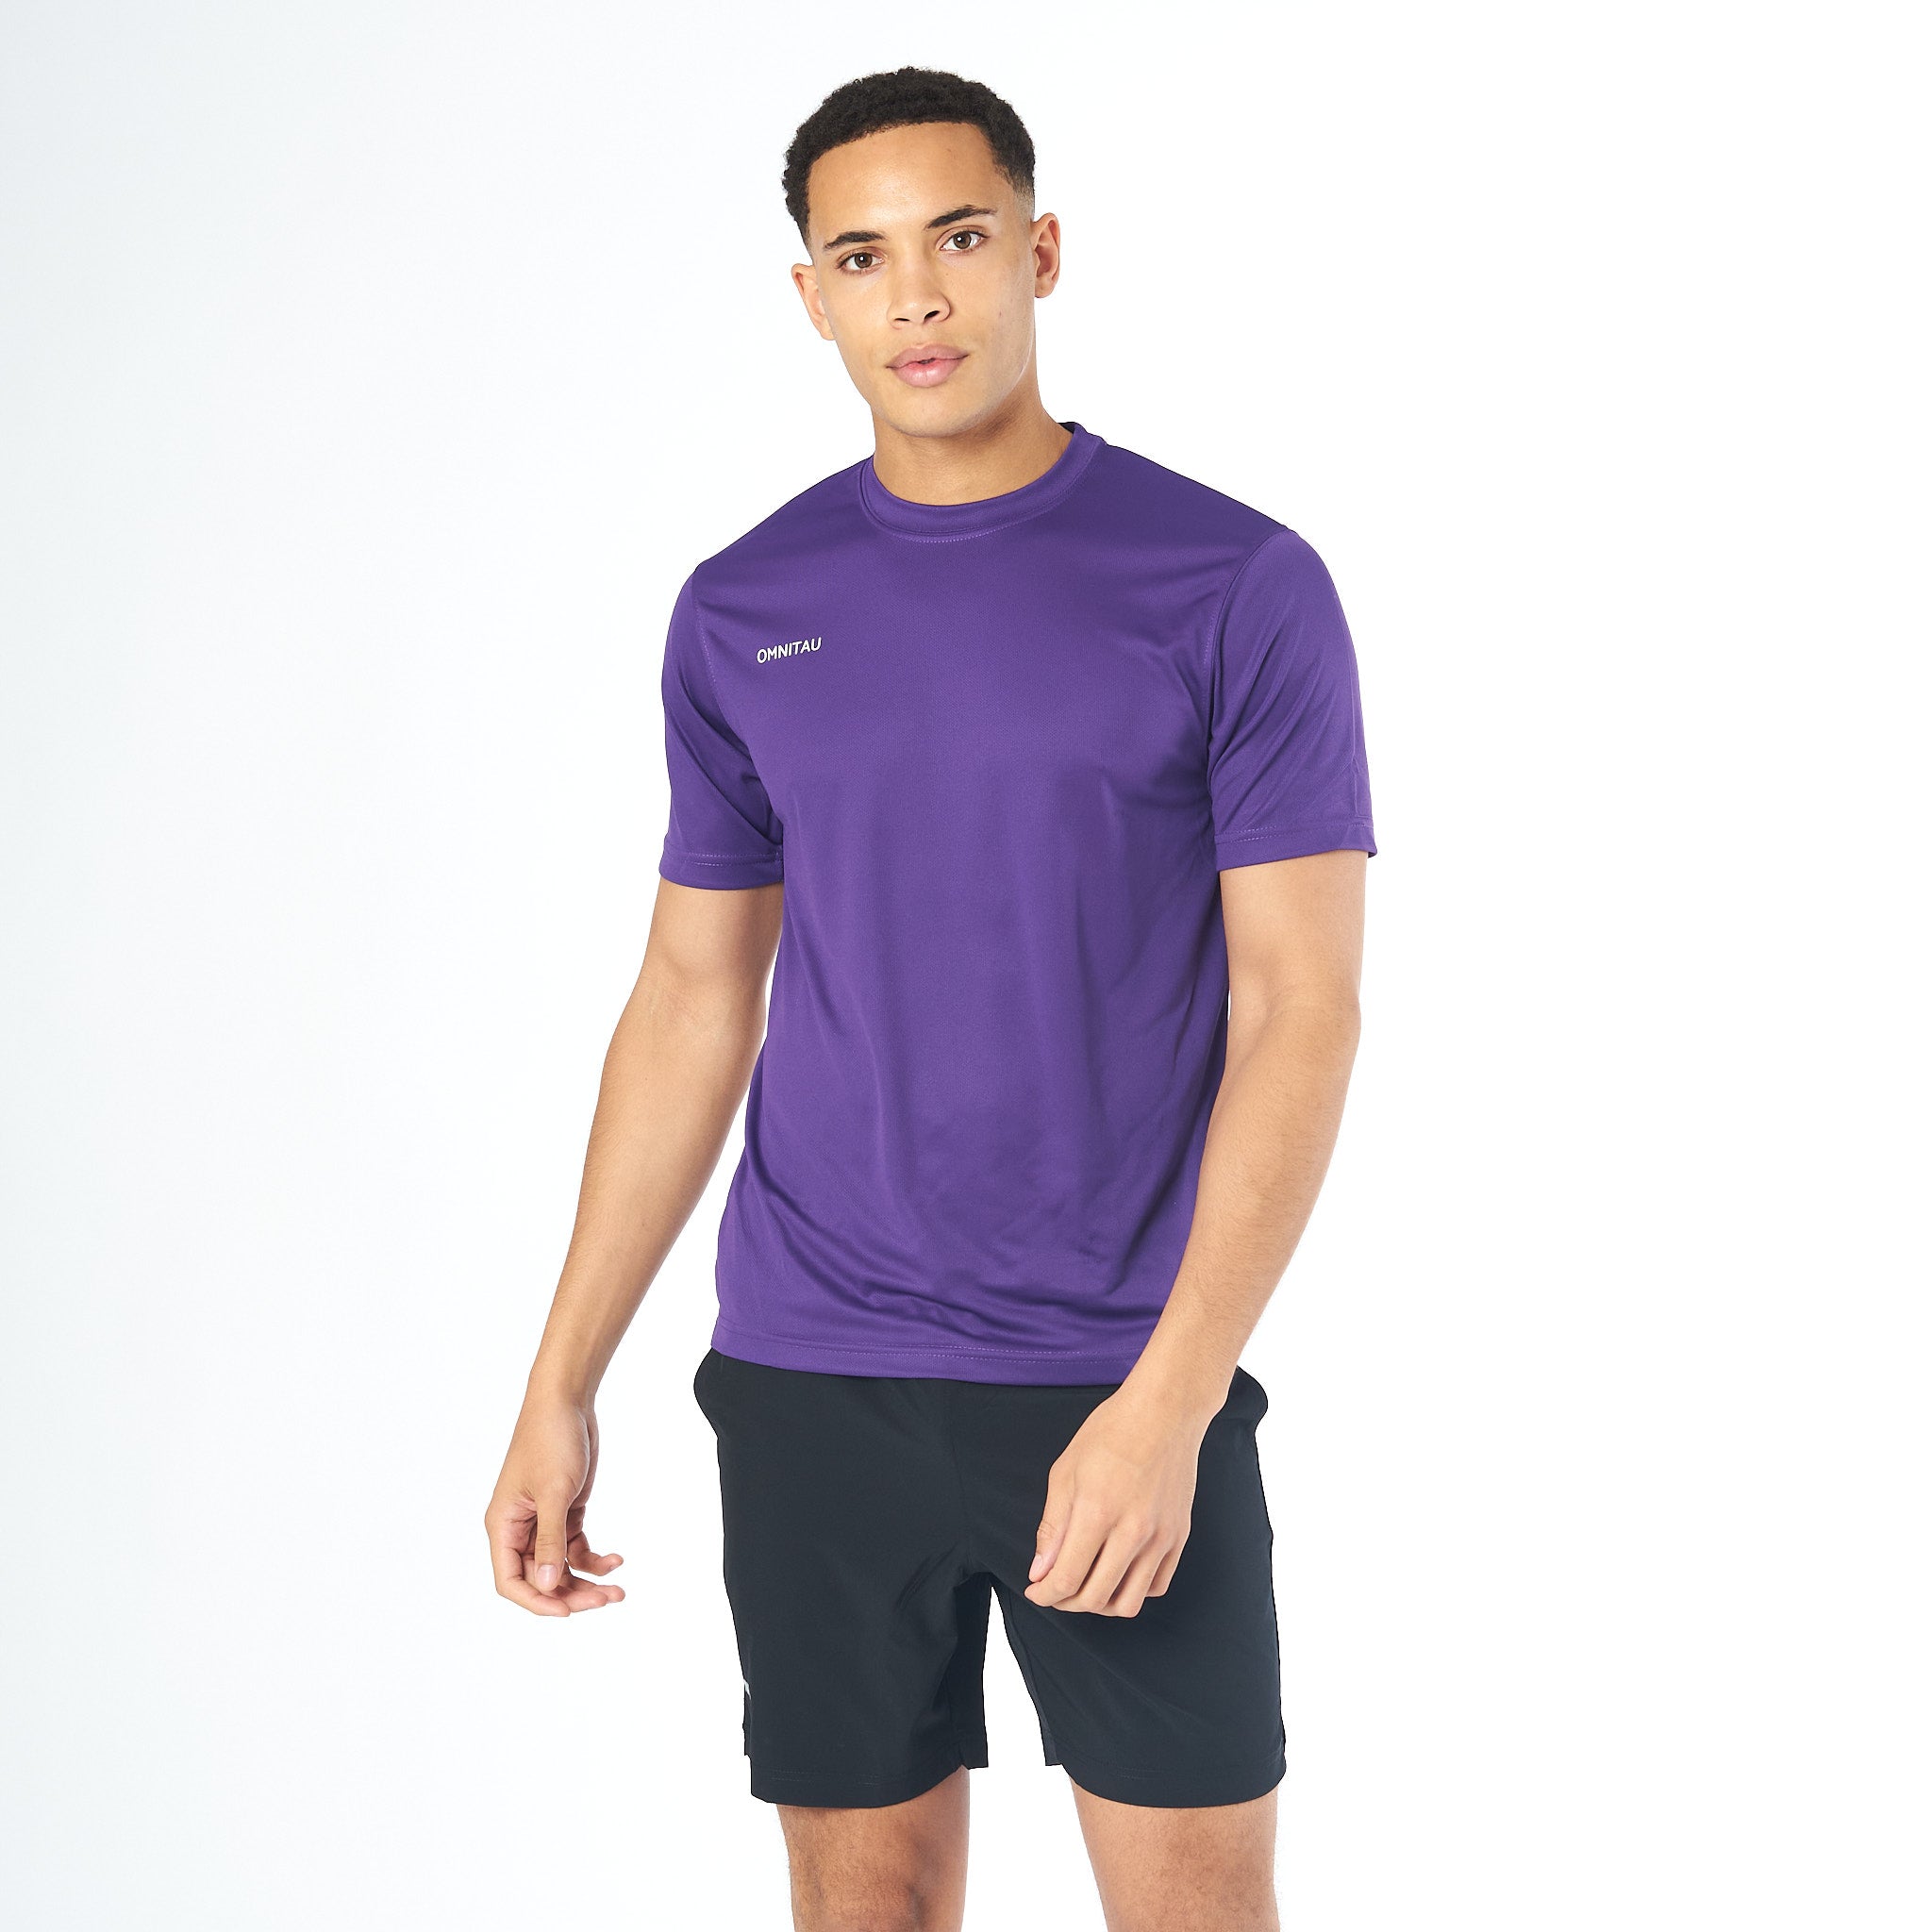 Omnitau Men's Team Sports Core Football Shirt - Purple